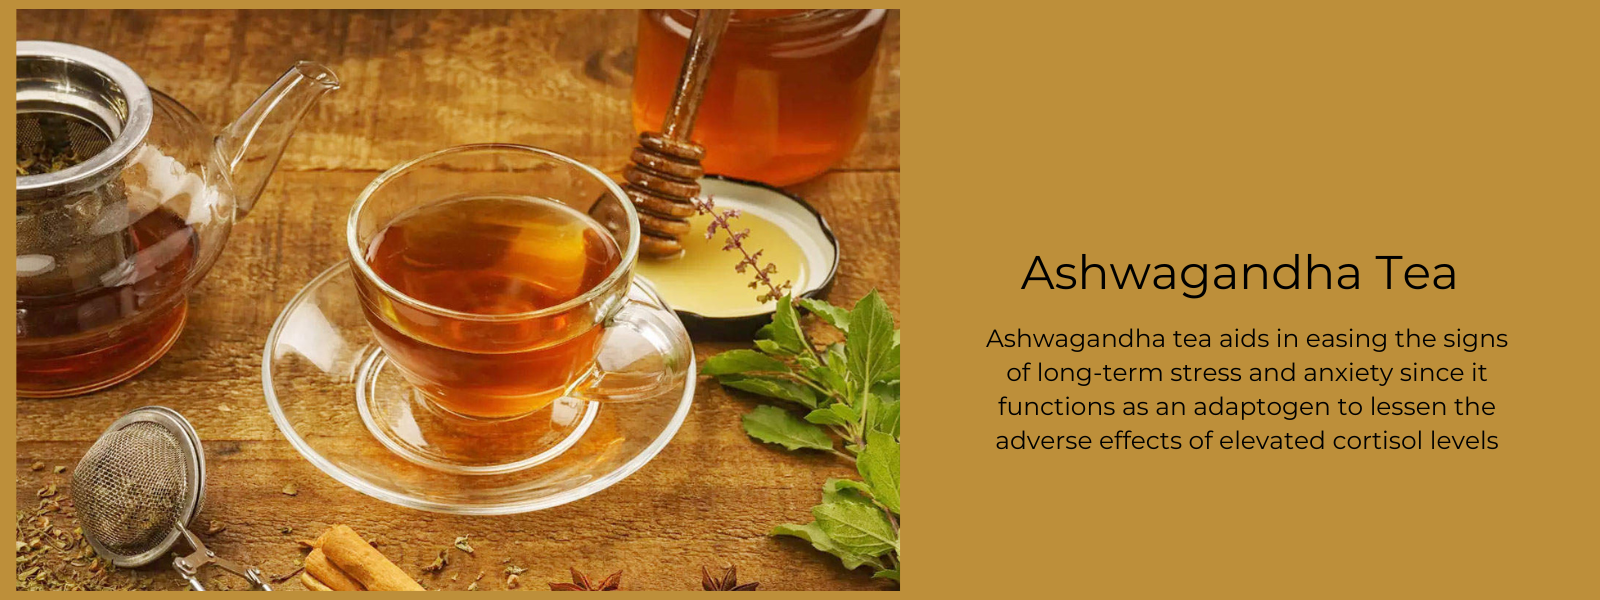 Ashwagandha Tea - Health Benefits, Uses and Important Facts